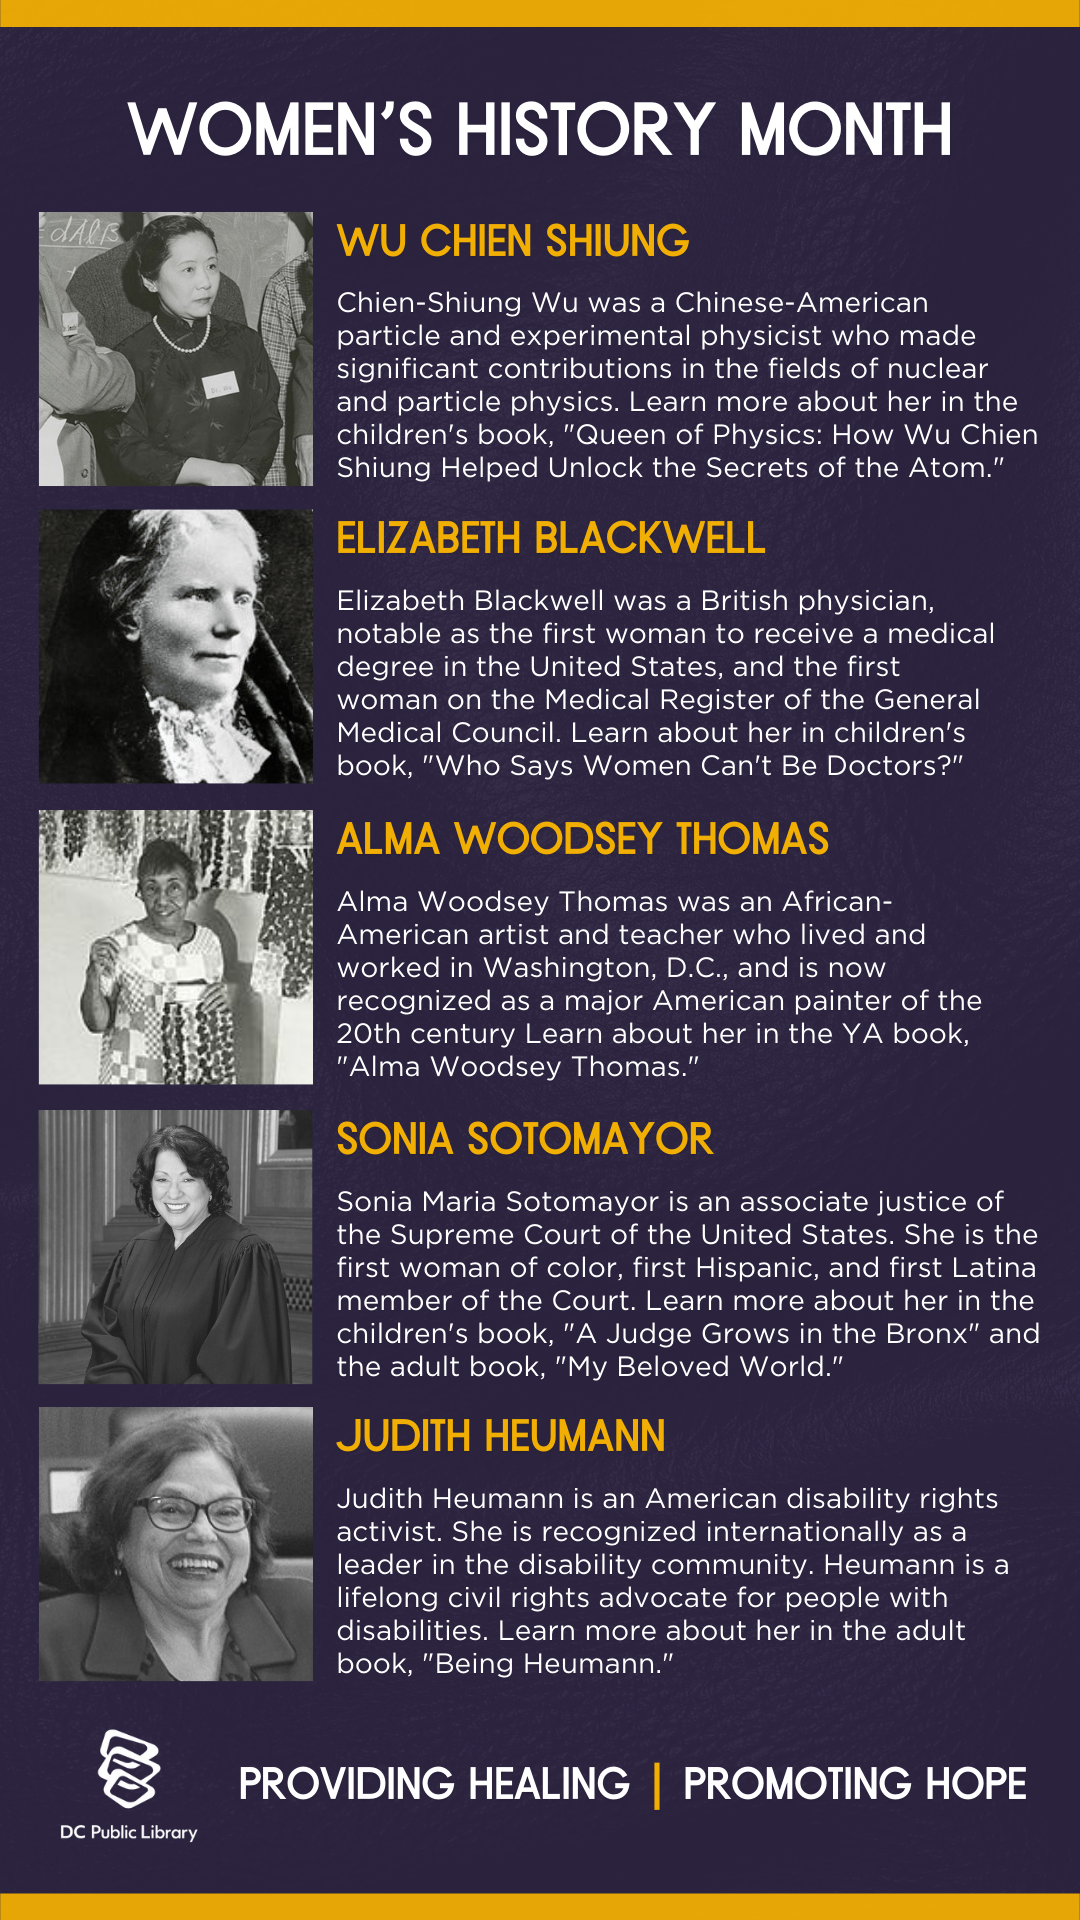 Women's History Month bios